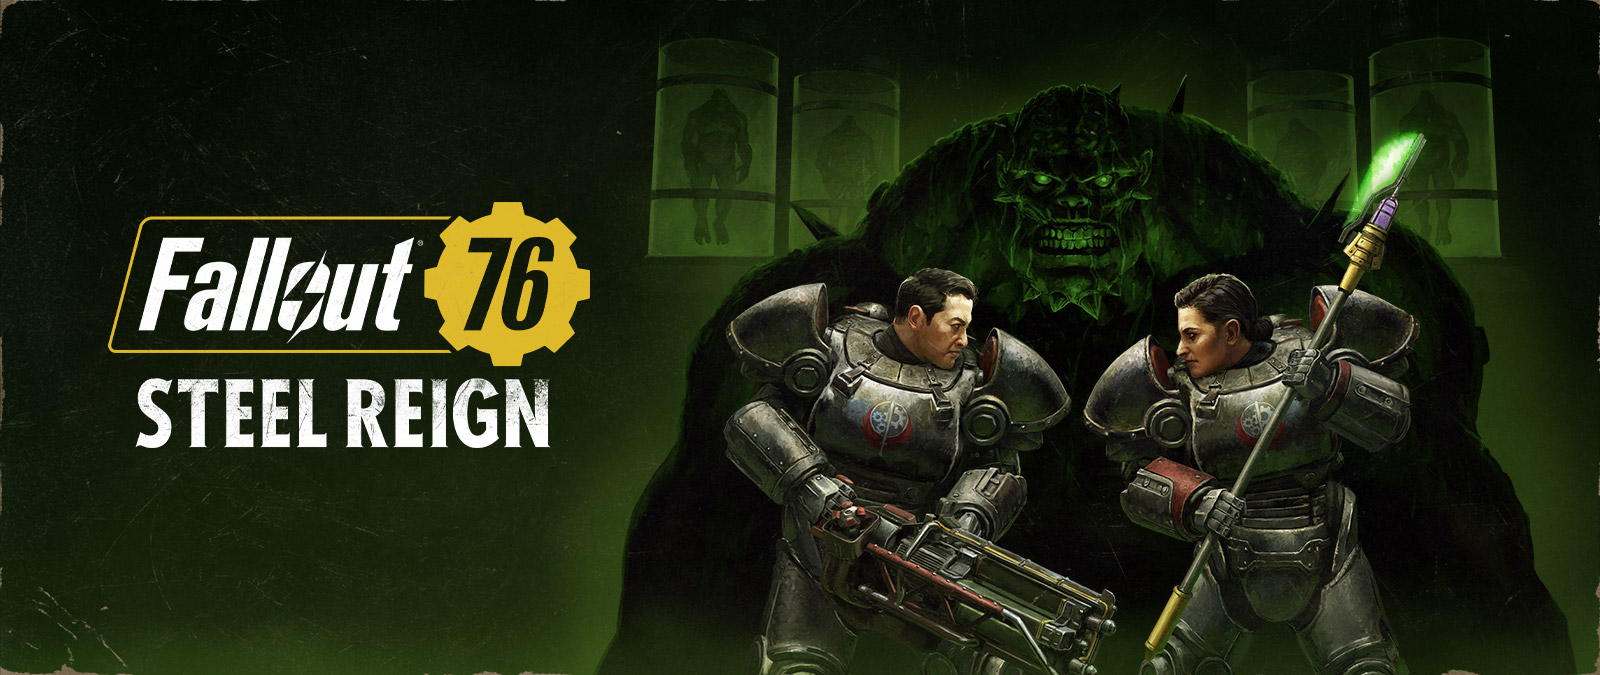 Fallout 76, Steel Reign, dos personajes con trajes mecánicos se enfrentan con un gran monstruo al fondo.